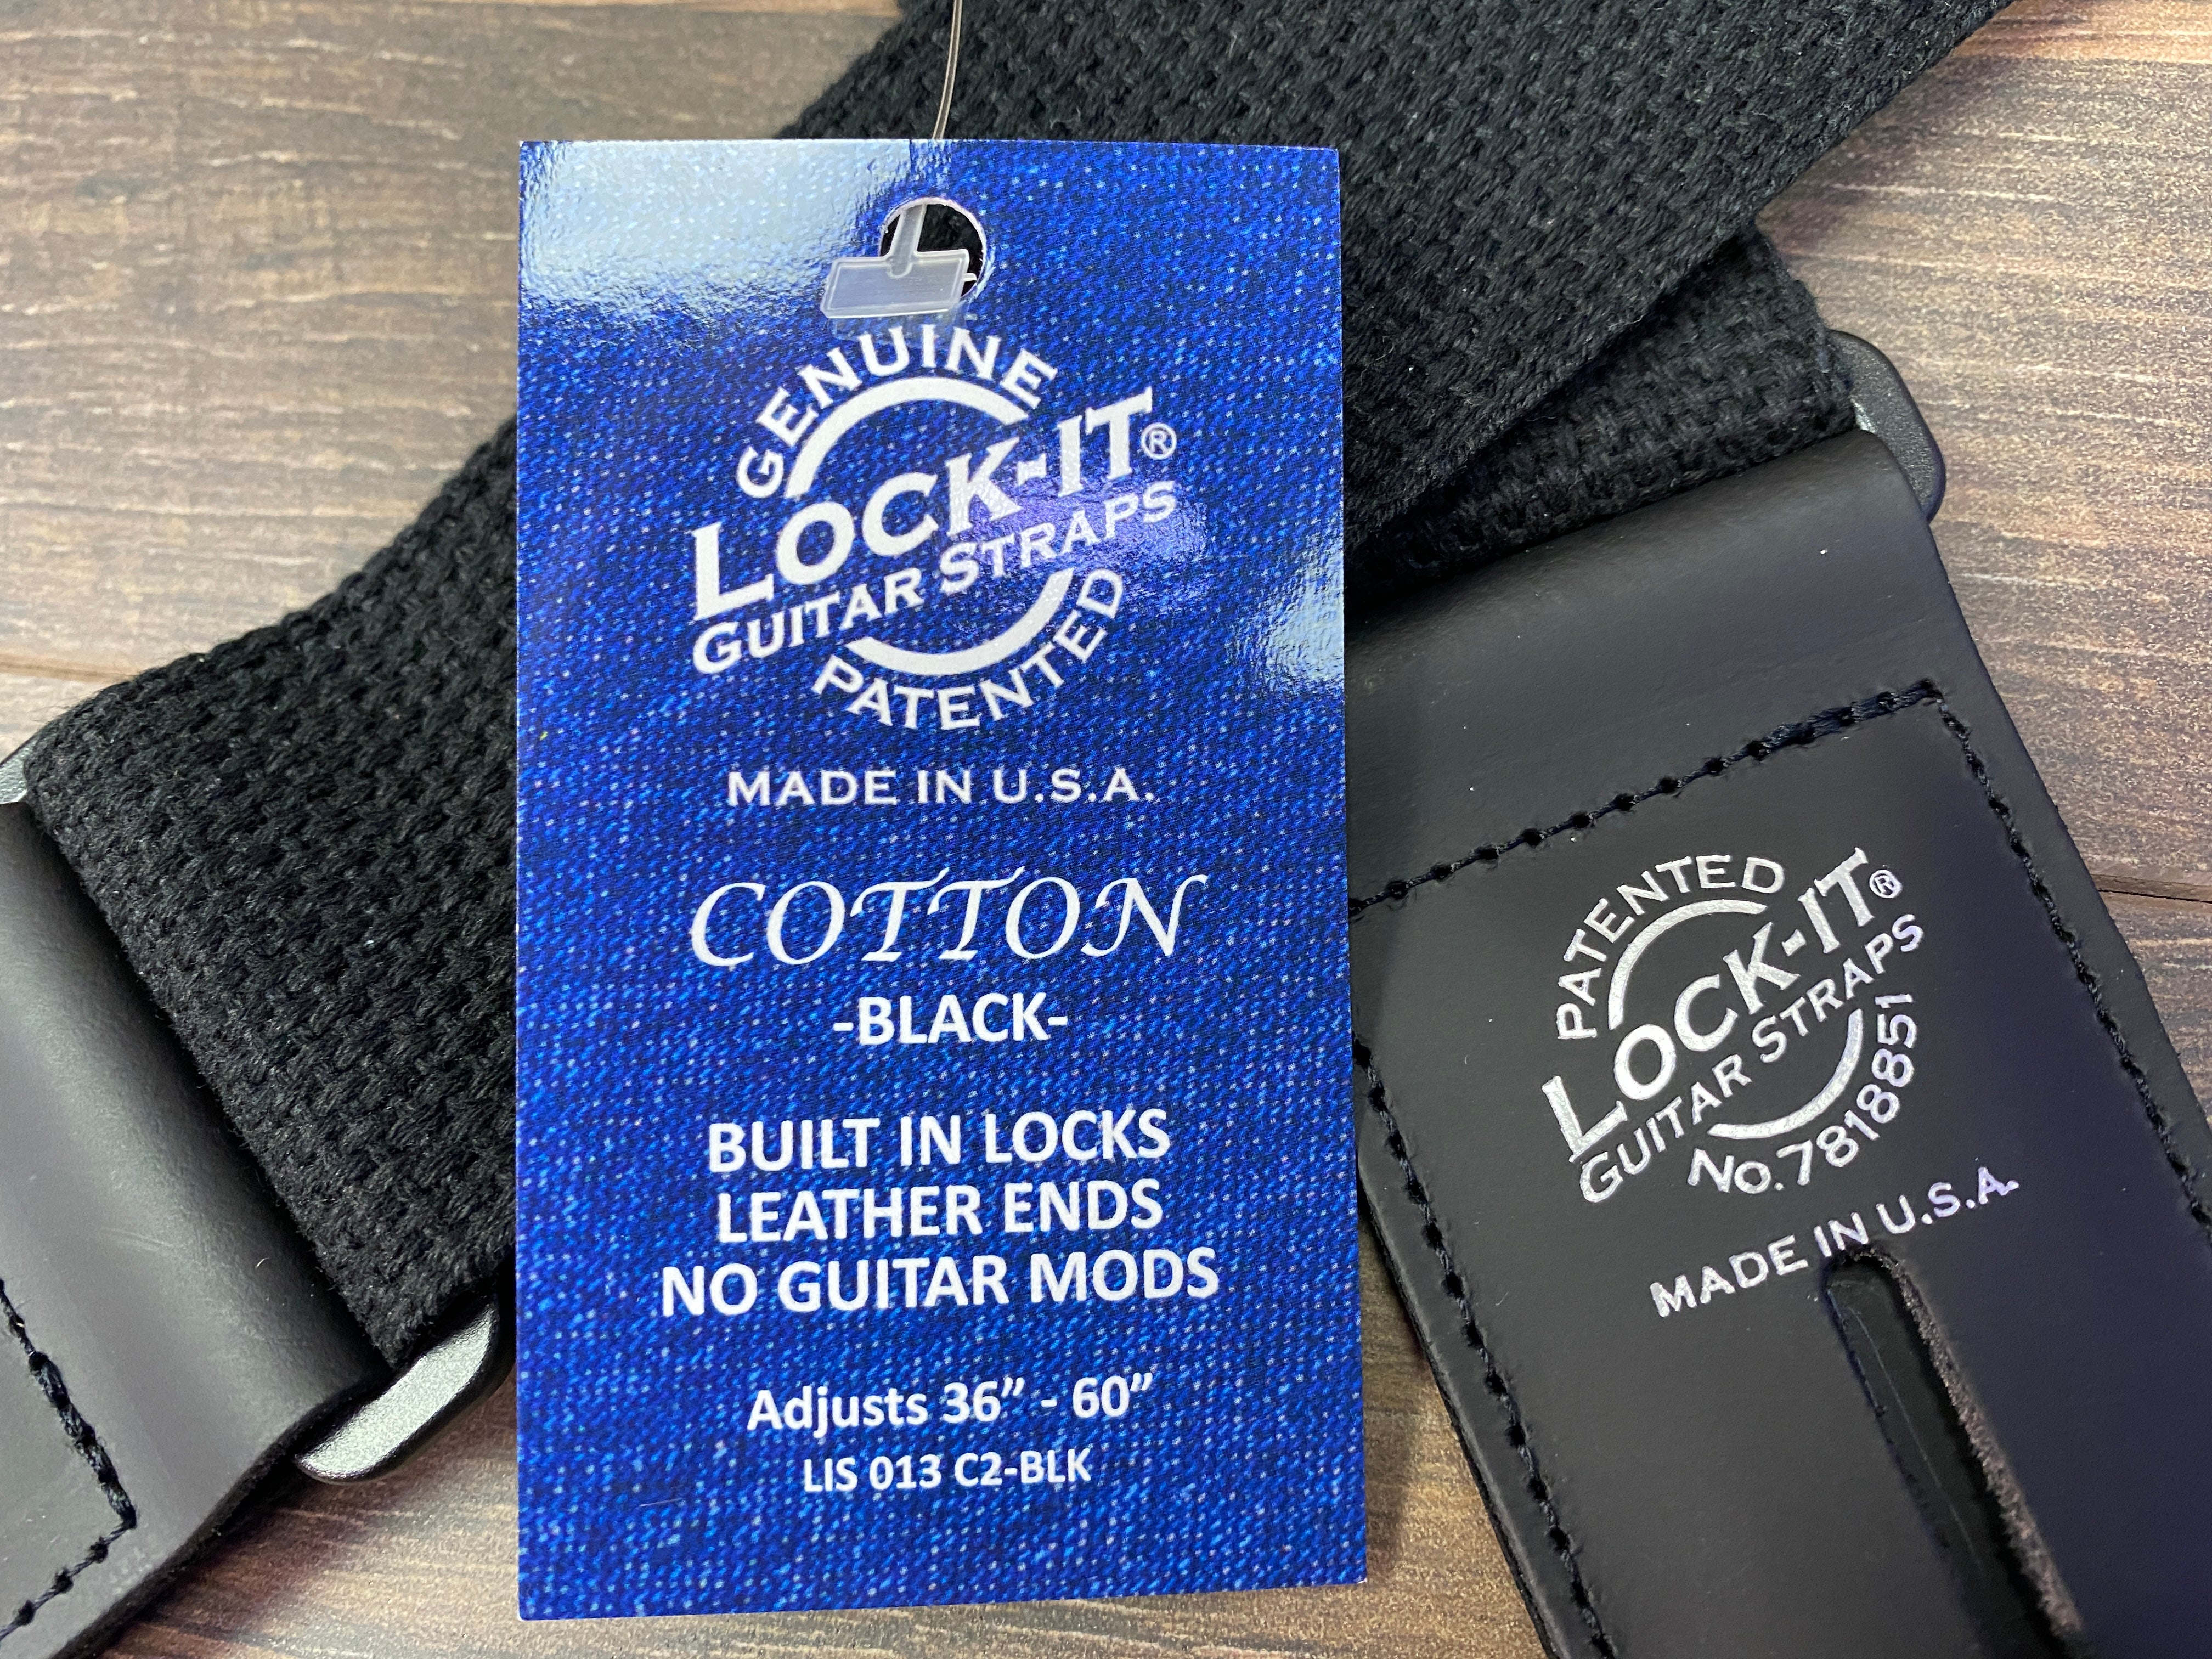 Lock-It LIS-013C2-BLK 2" Wide, Long Cotton Guitar Strap w/ built in strap locks